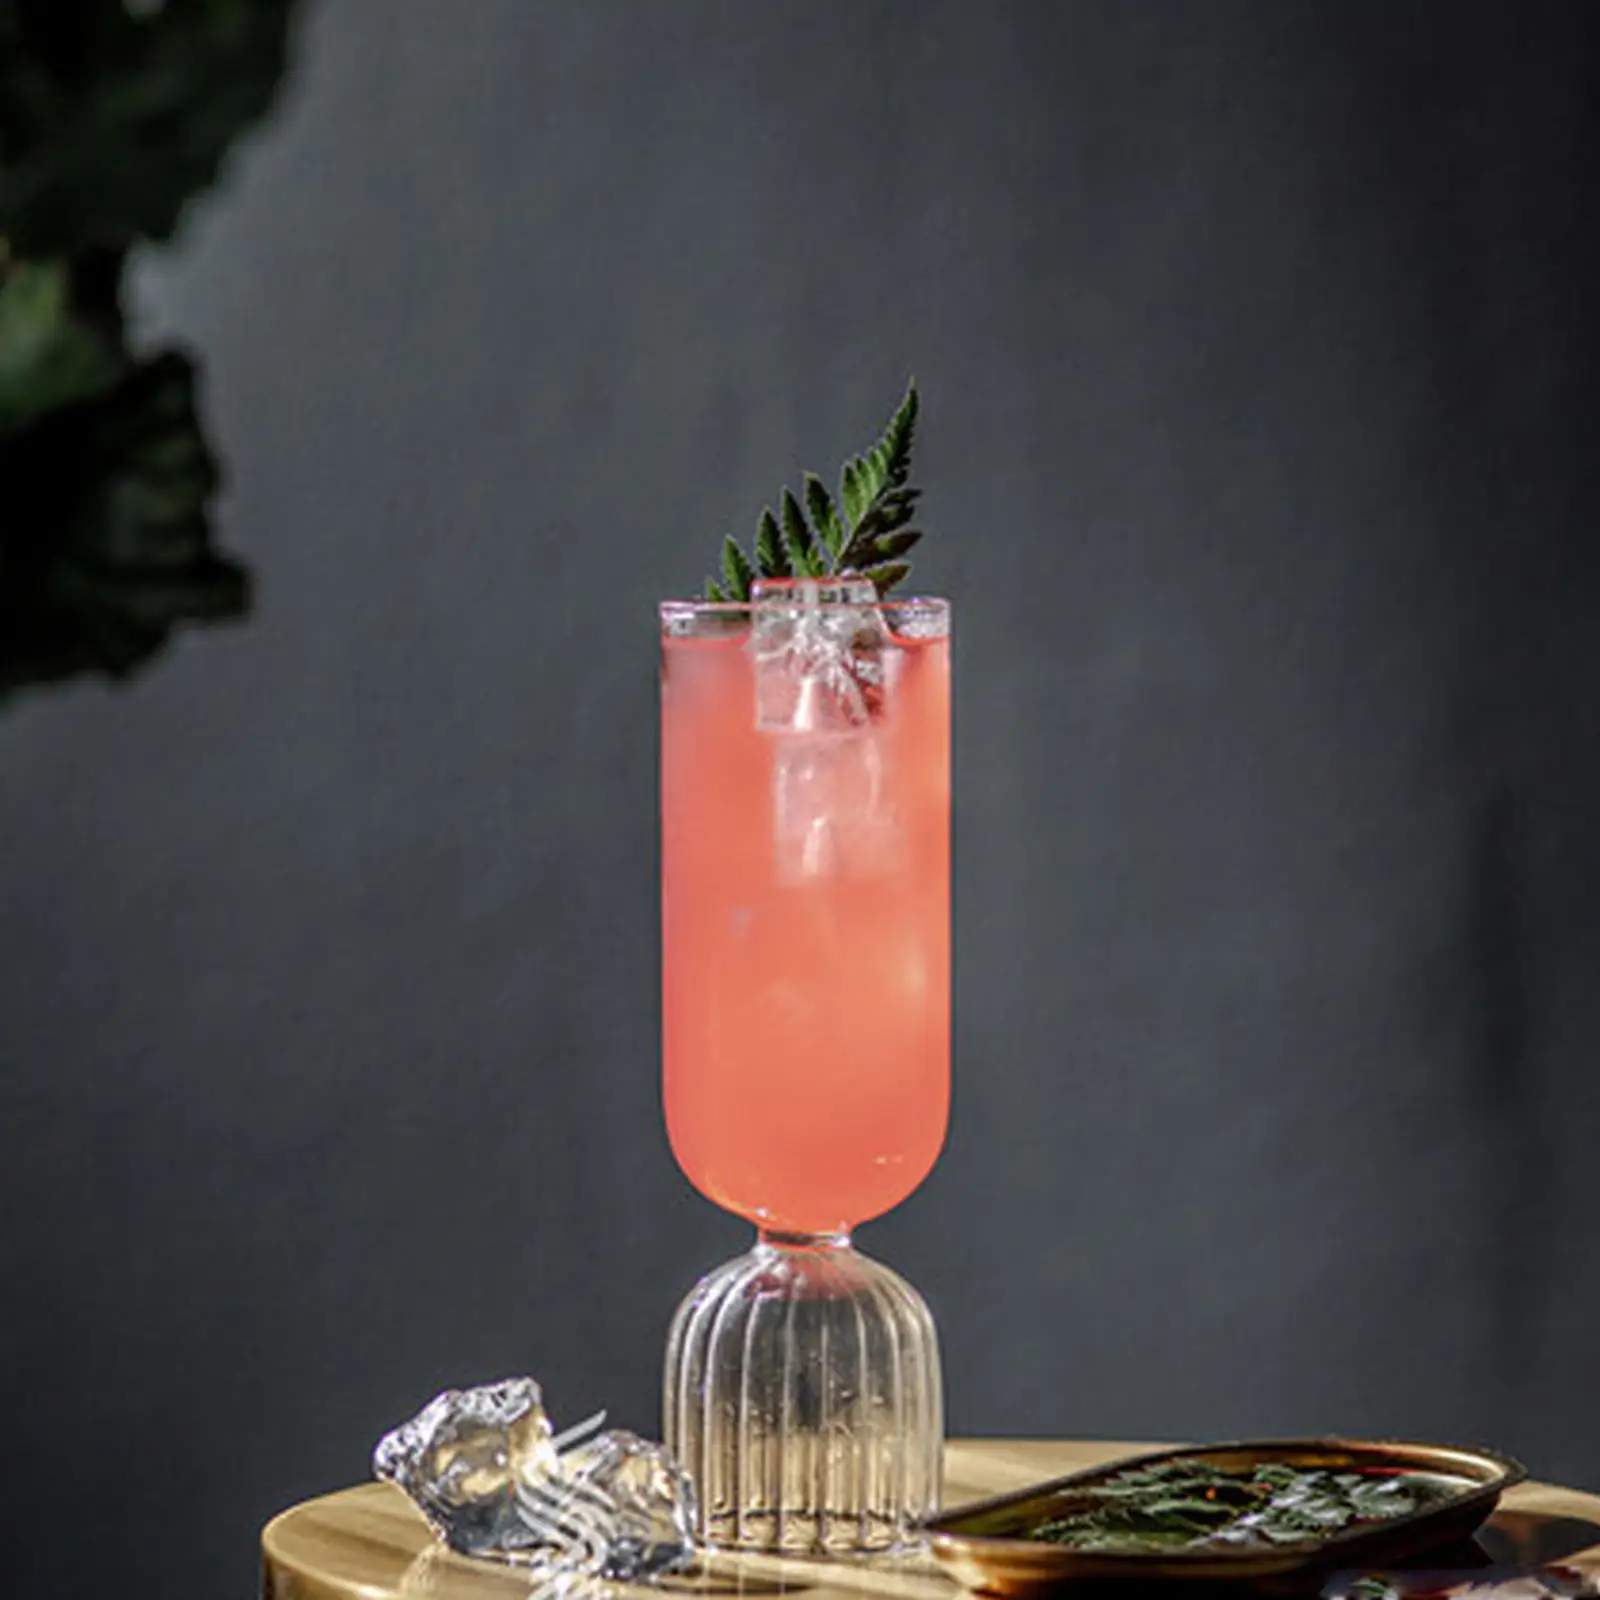 Cocktail 10ml Elegant Drinking Glasses Goblet for Juice Bar Party